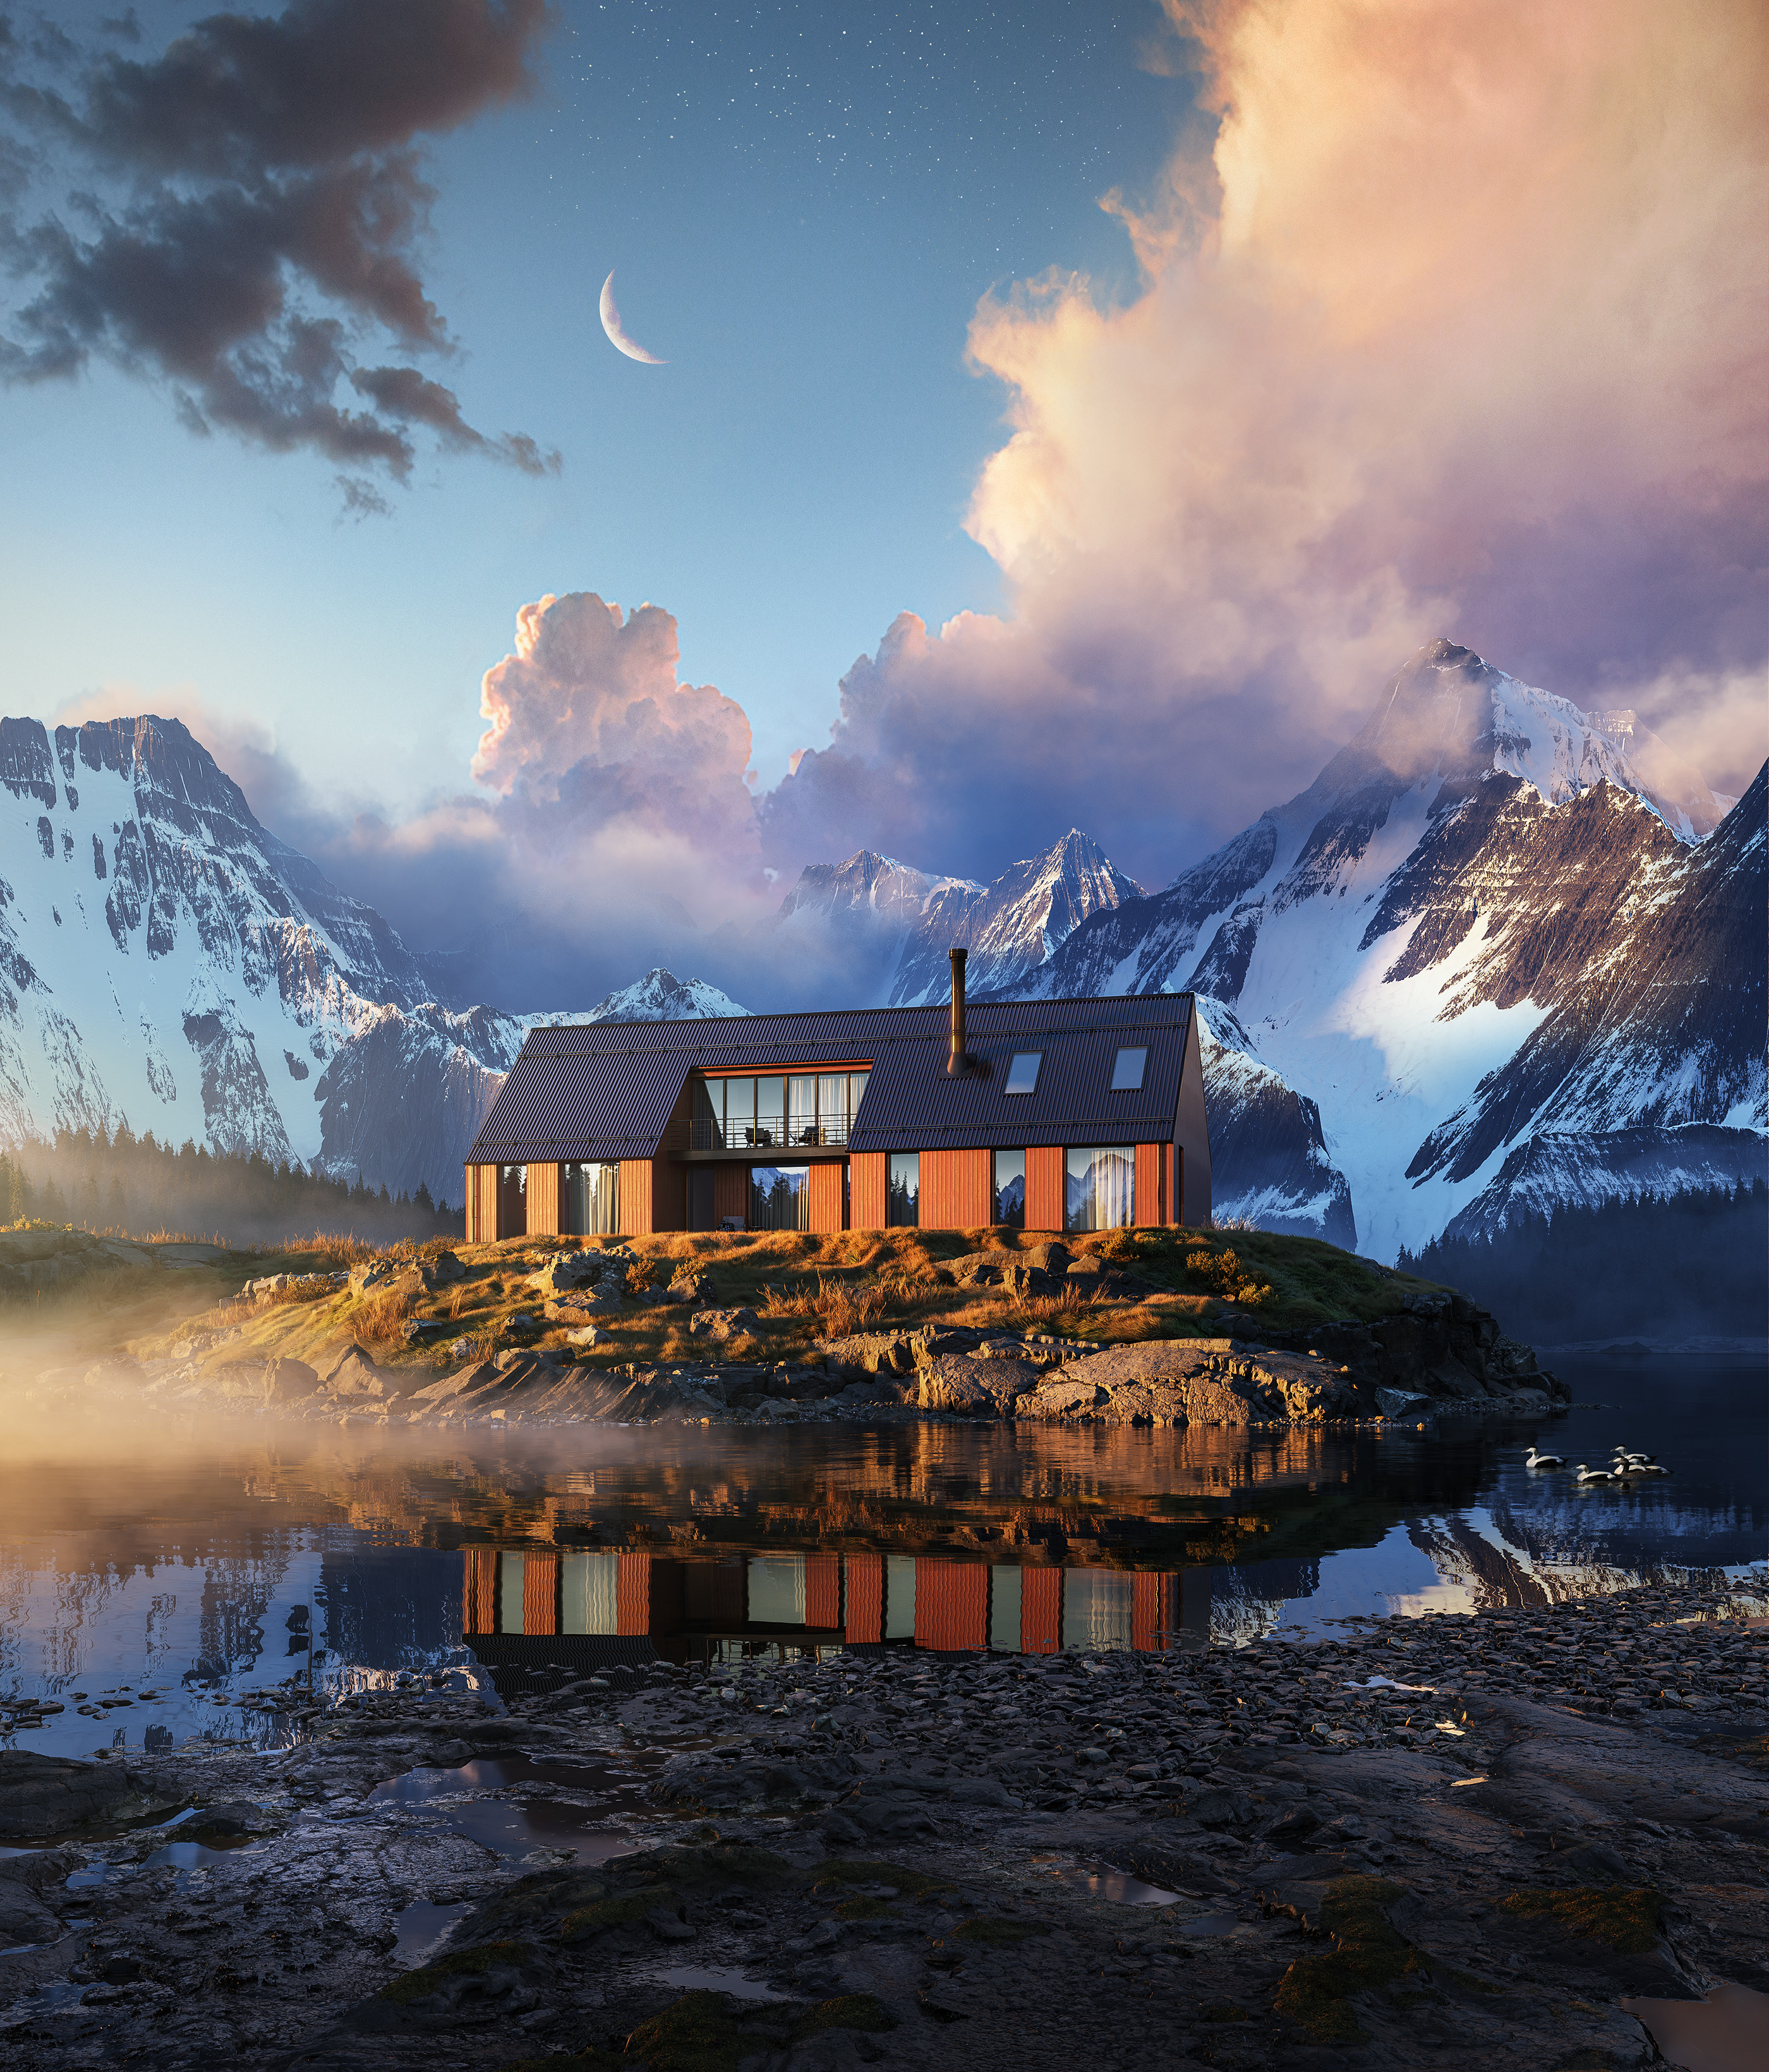 Norway Europe Digital Art Artwork Nature Landscape Mountains Snow Lake House Reflection Moon CGi 2800x3280